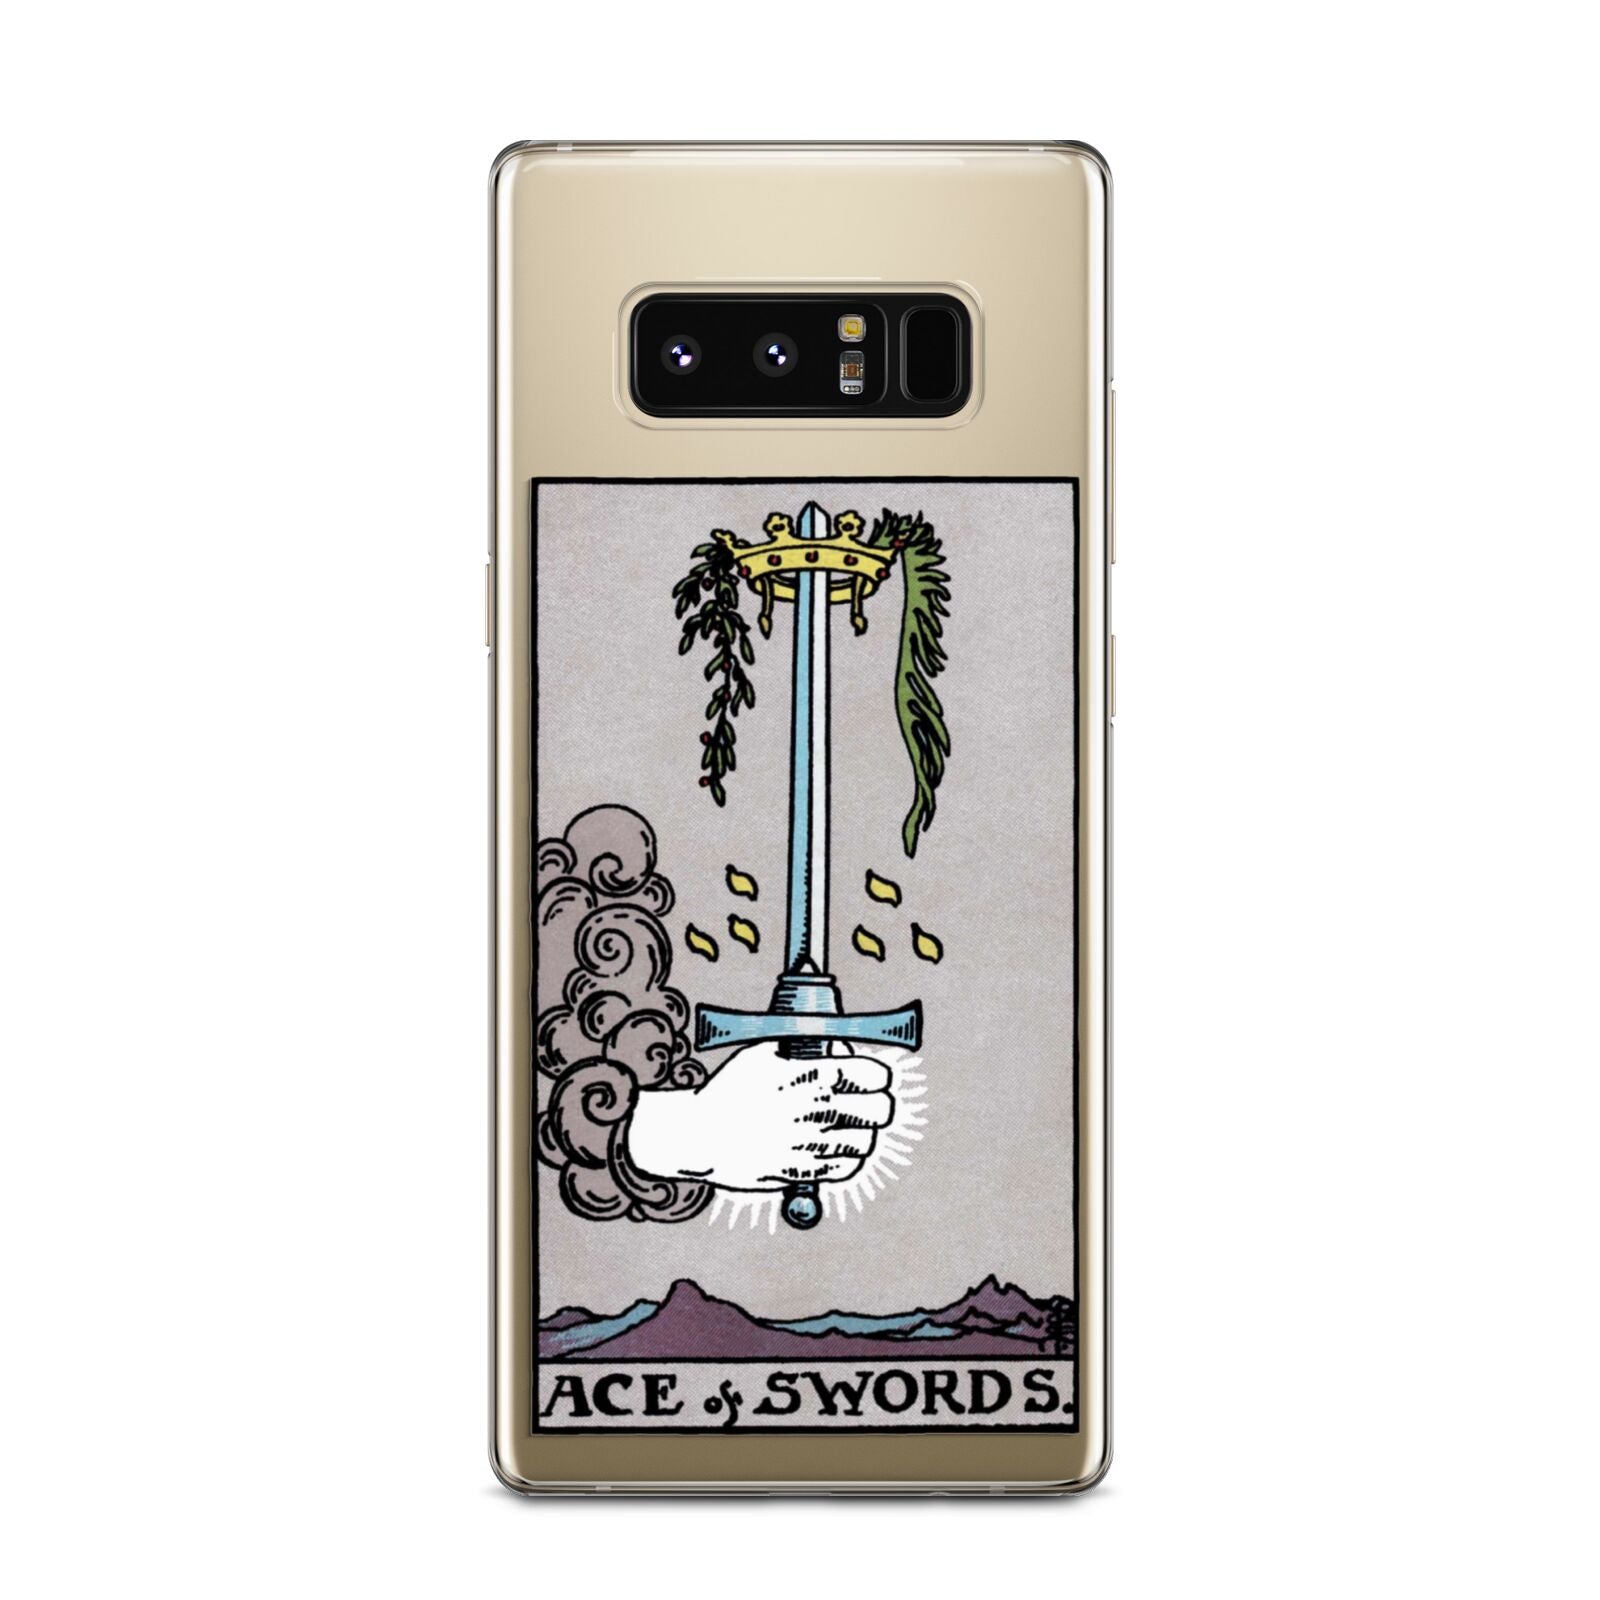 Ace of Swords Tarot Card Samsung Galaxy Note 8 Case